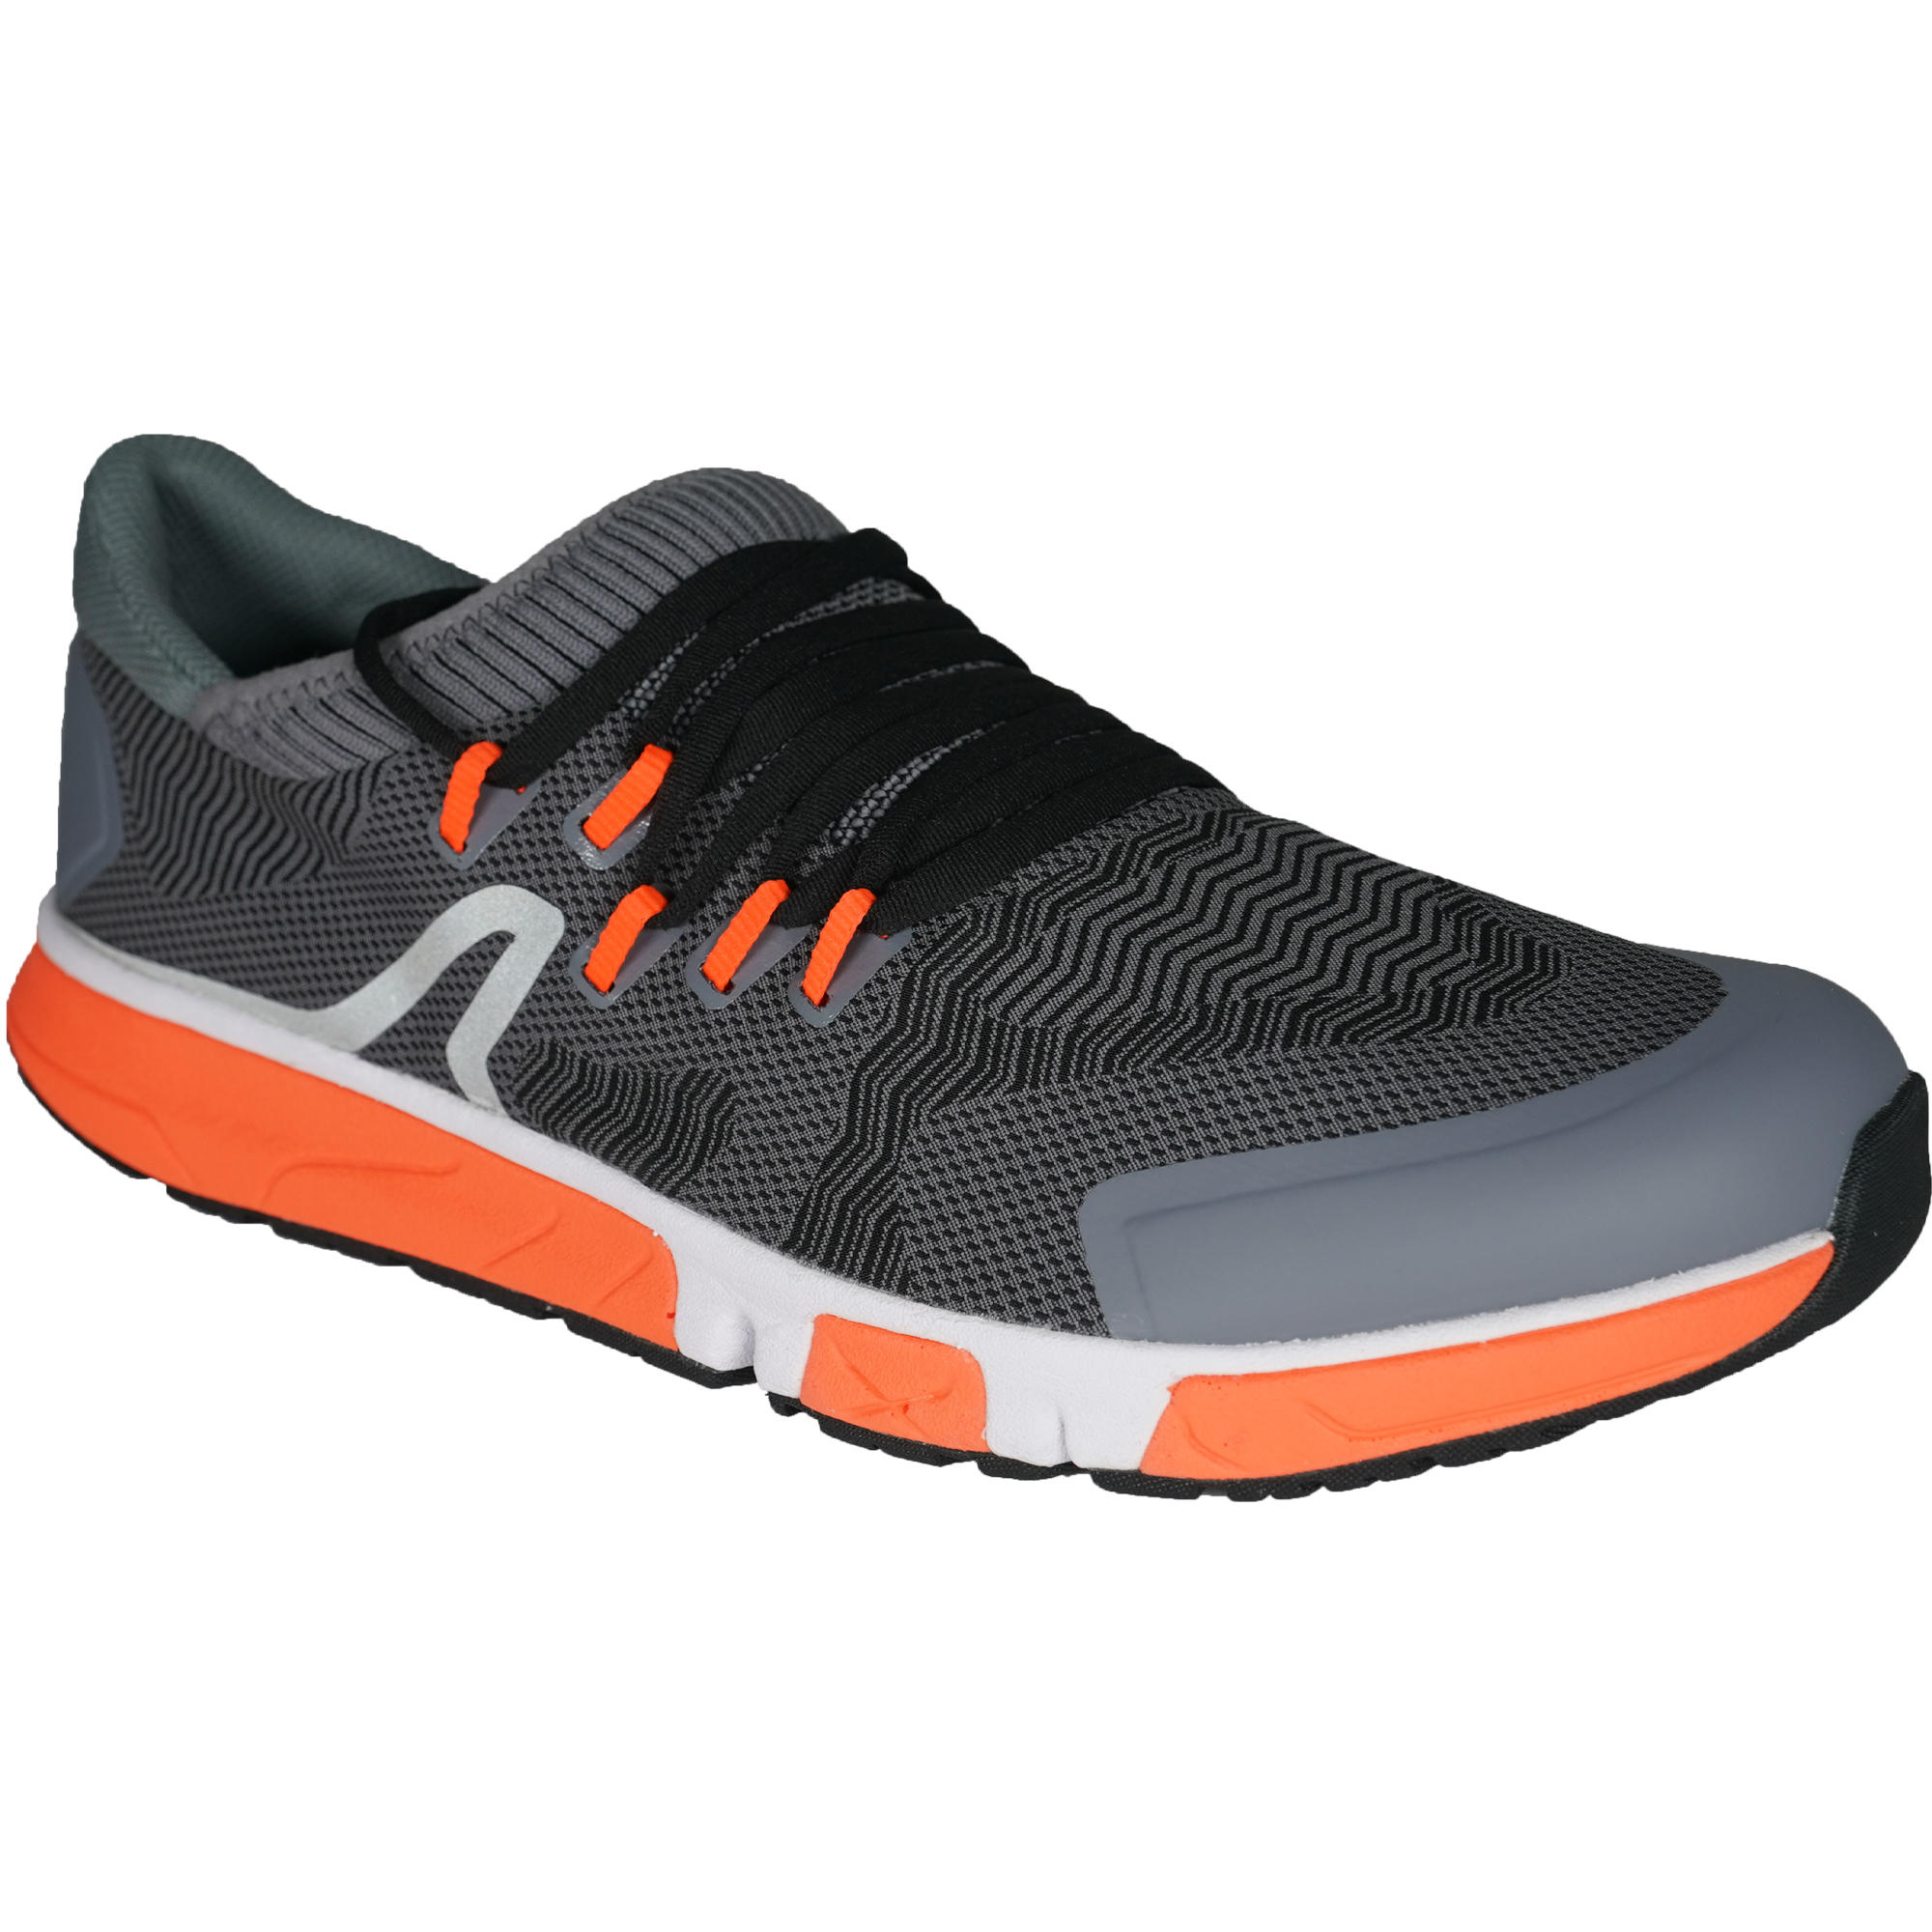 NEWFEEL RW 900 long-distance fitness walking shoes - grey/orange